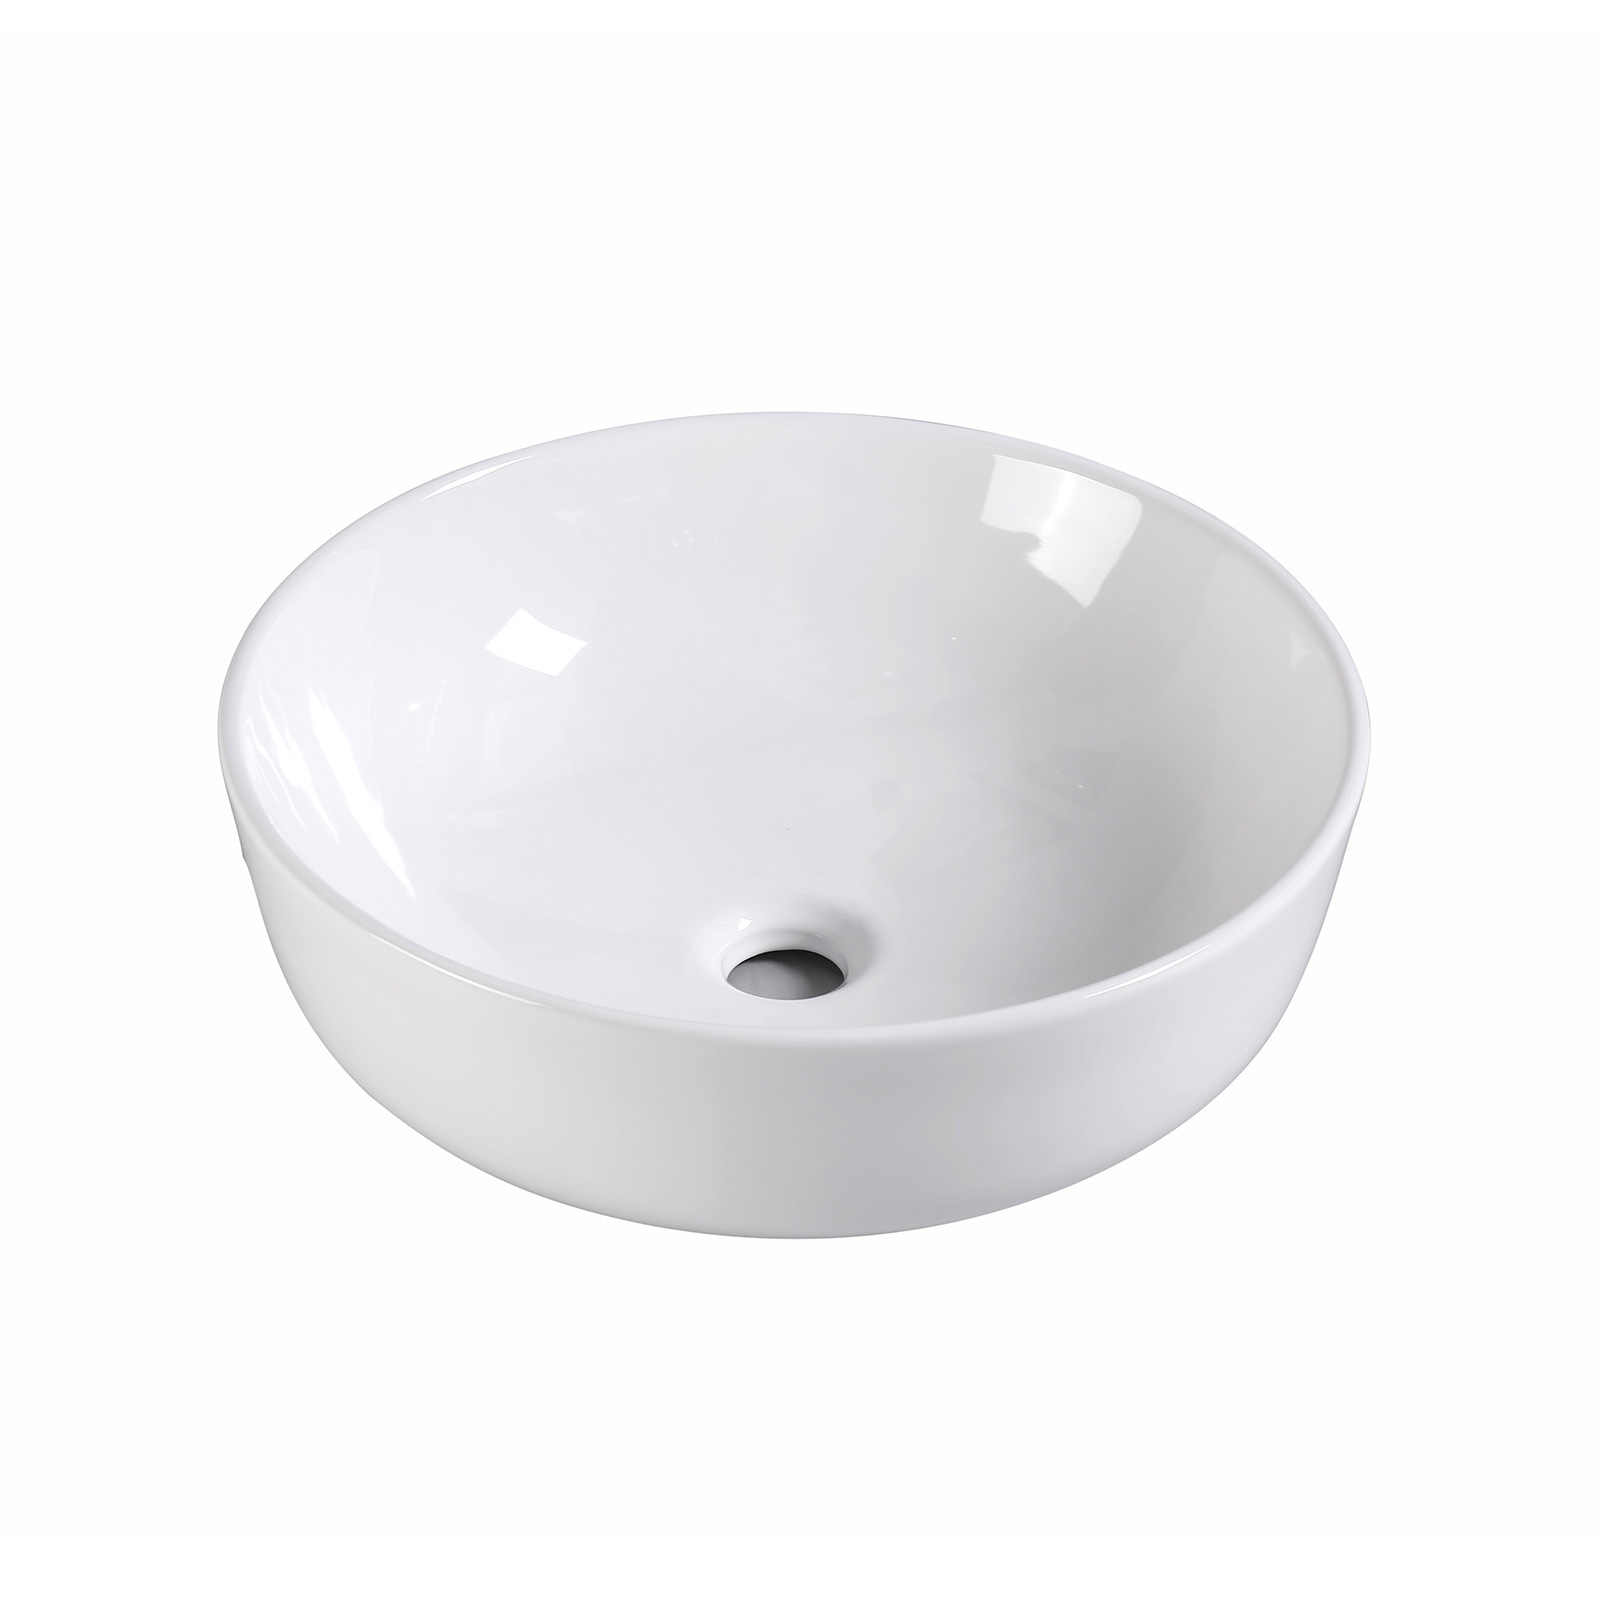 42X 42X 13.5cm Ceramic Bathroom Basin Round - WHITE